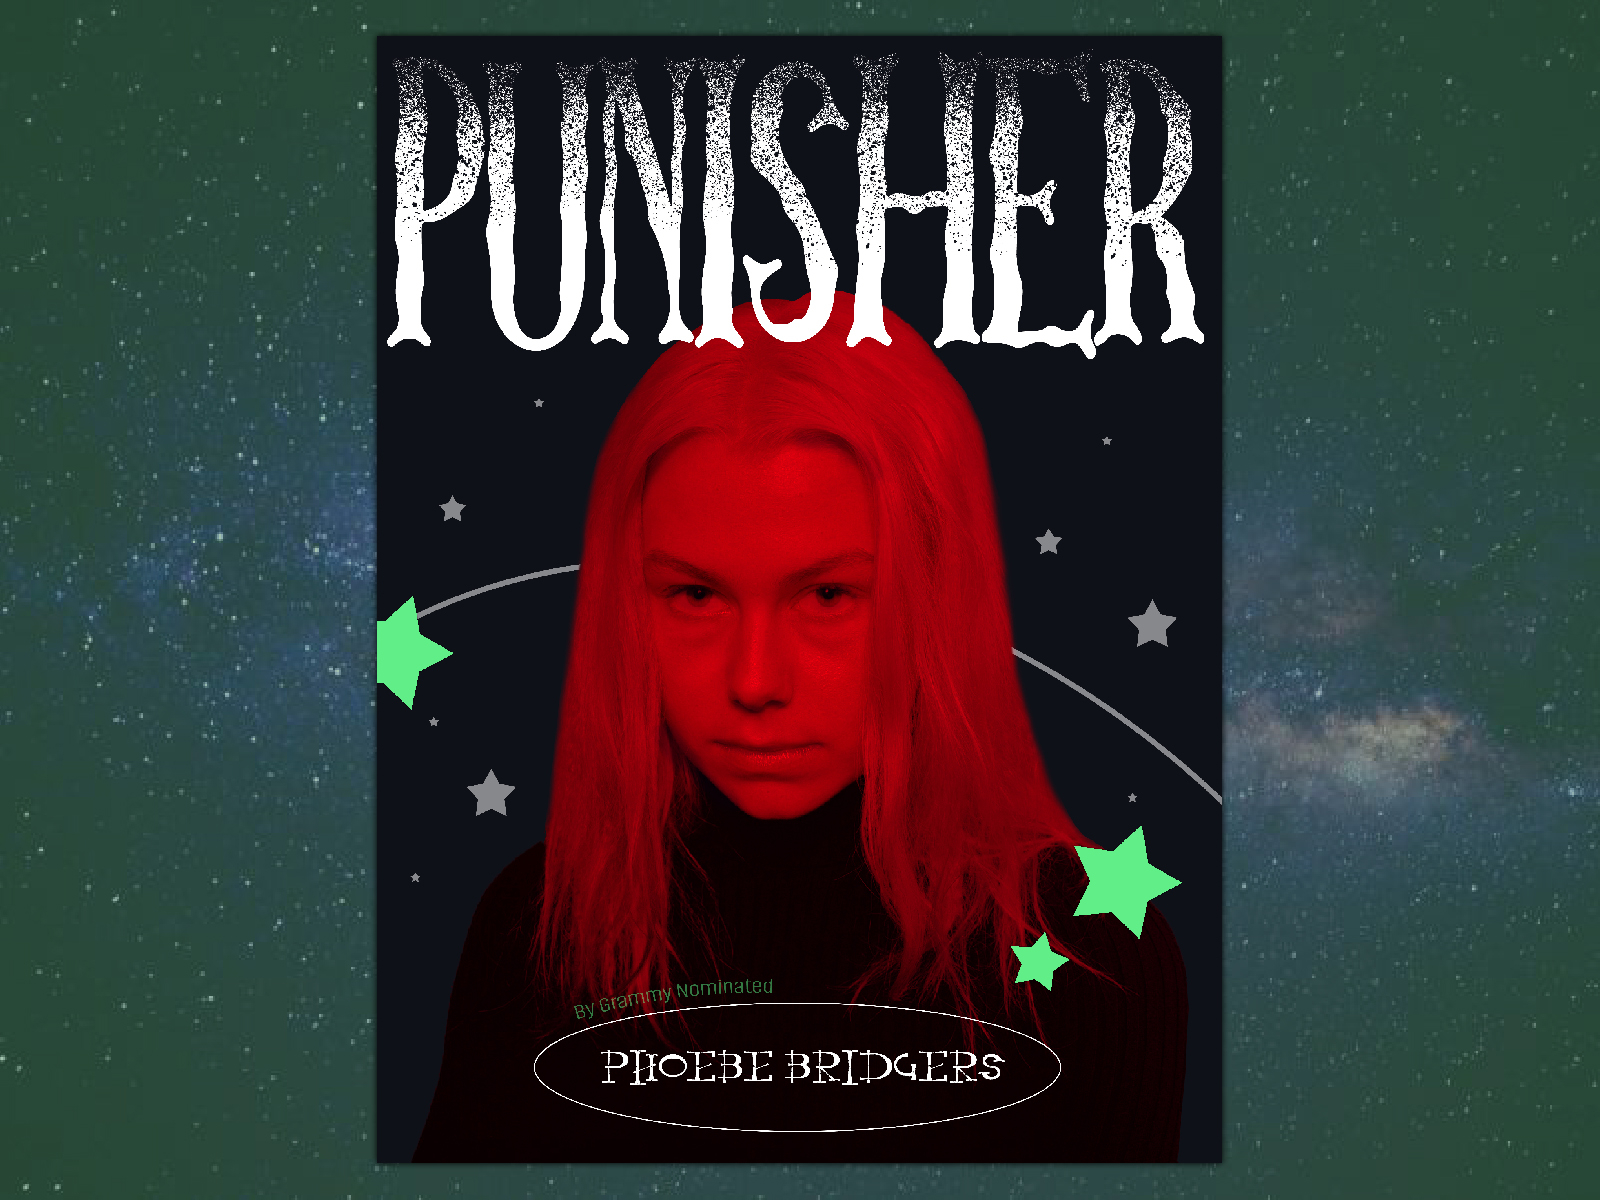 Phoebe Bridgers Punisher Album Posters on Behance